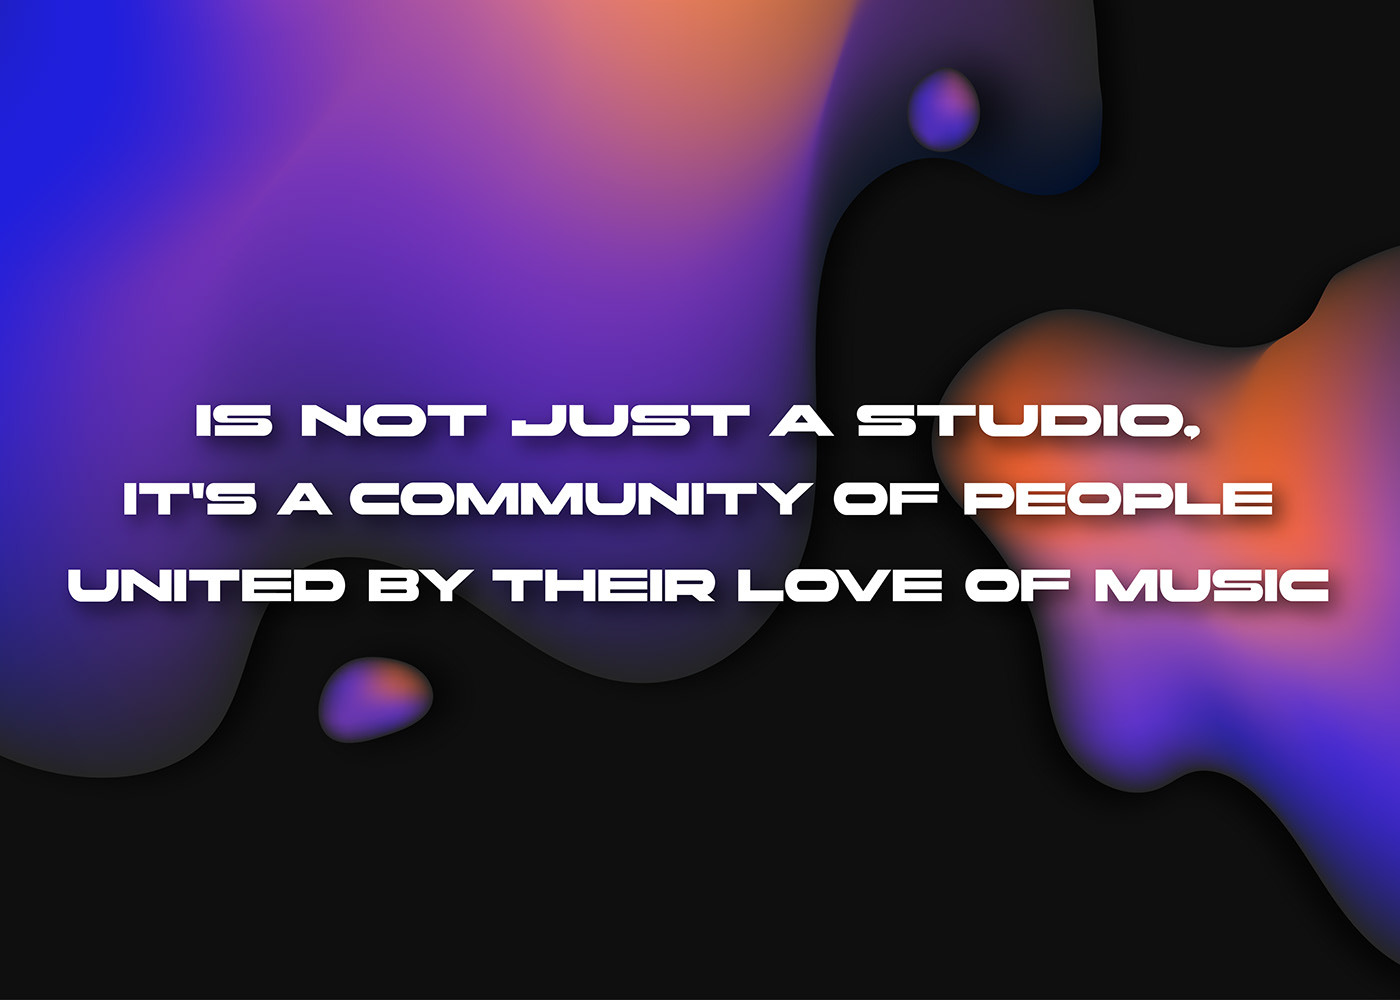 Logo Design brand identity Graphic Designer Music Production music Music Studio logo Brand music